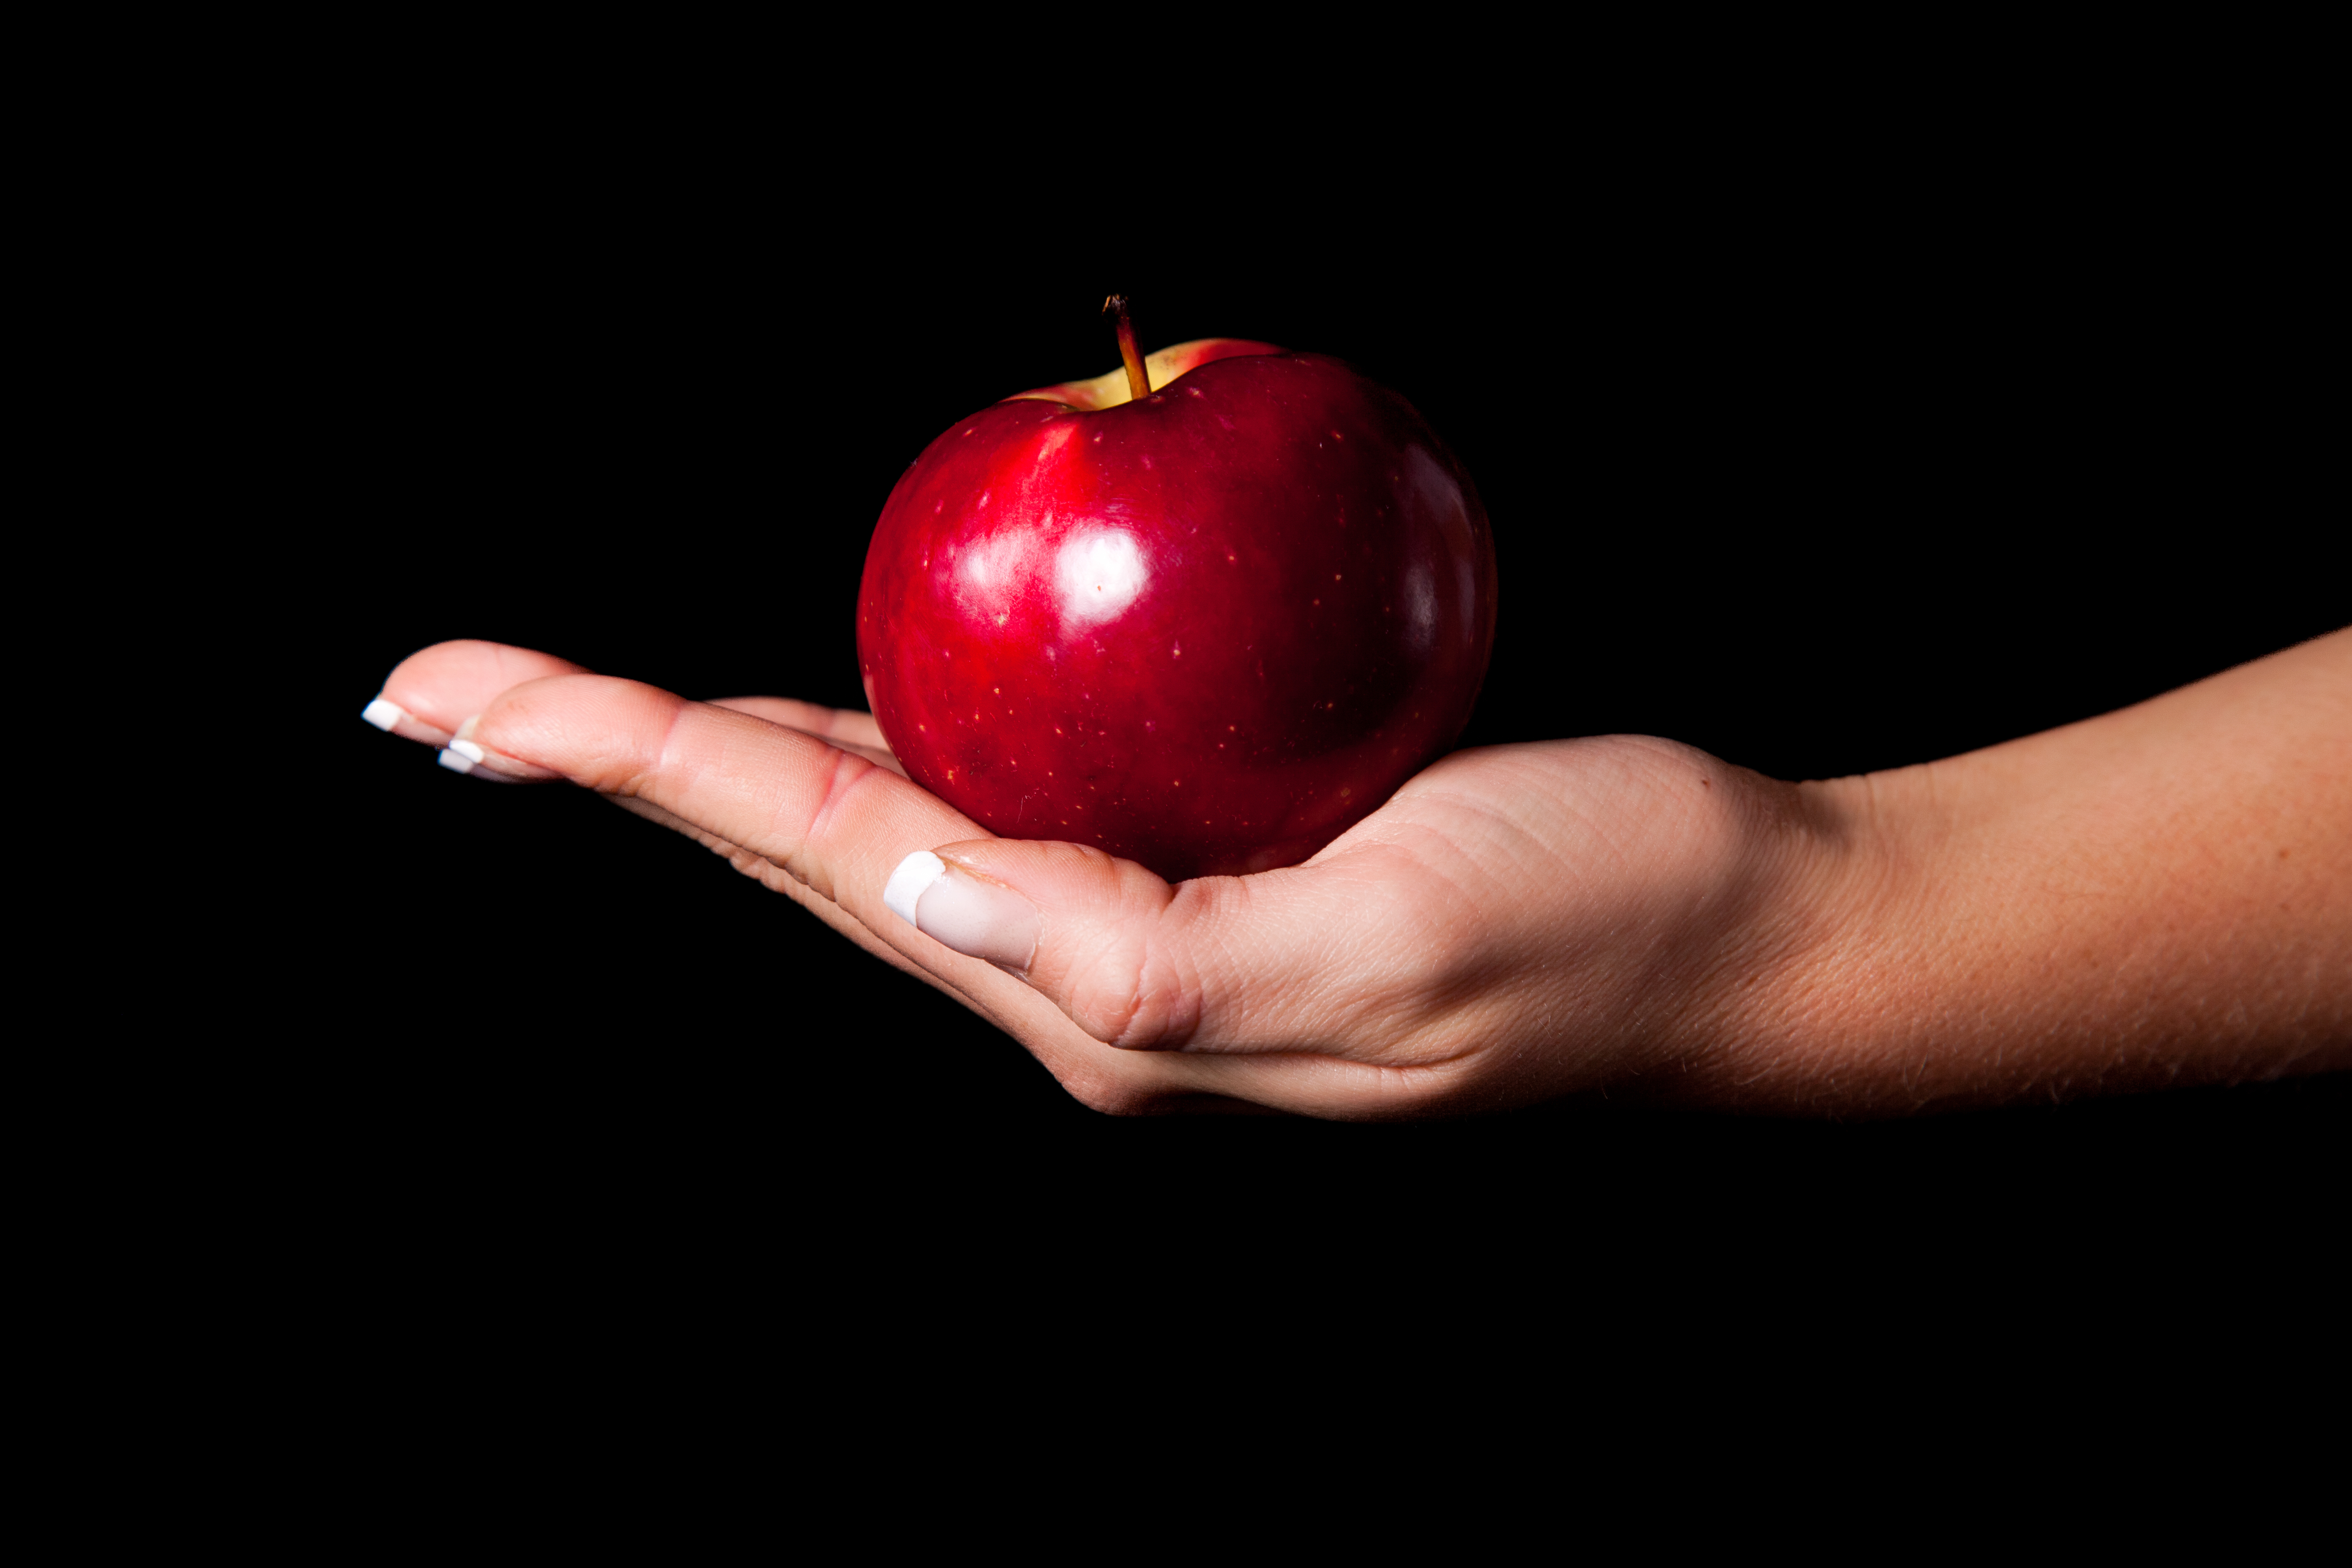 Кинуть яблоко. Яблоко в руке. Яблоко на темном фоне. Яблоко в руке на темном фоне. Красное яблоко в руке.